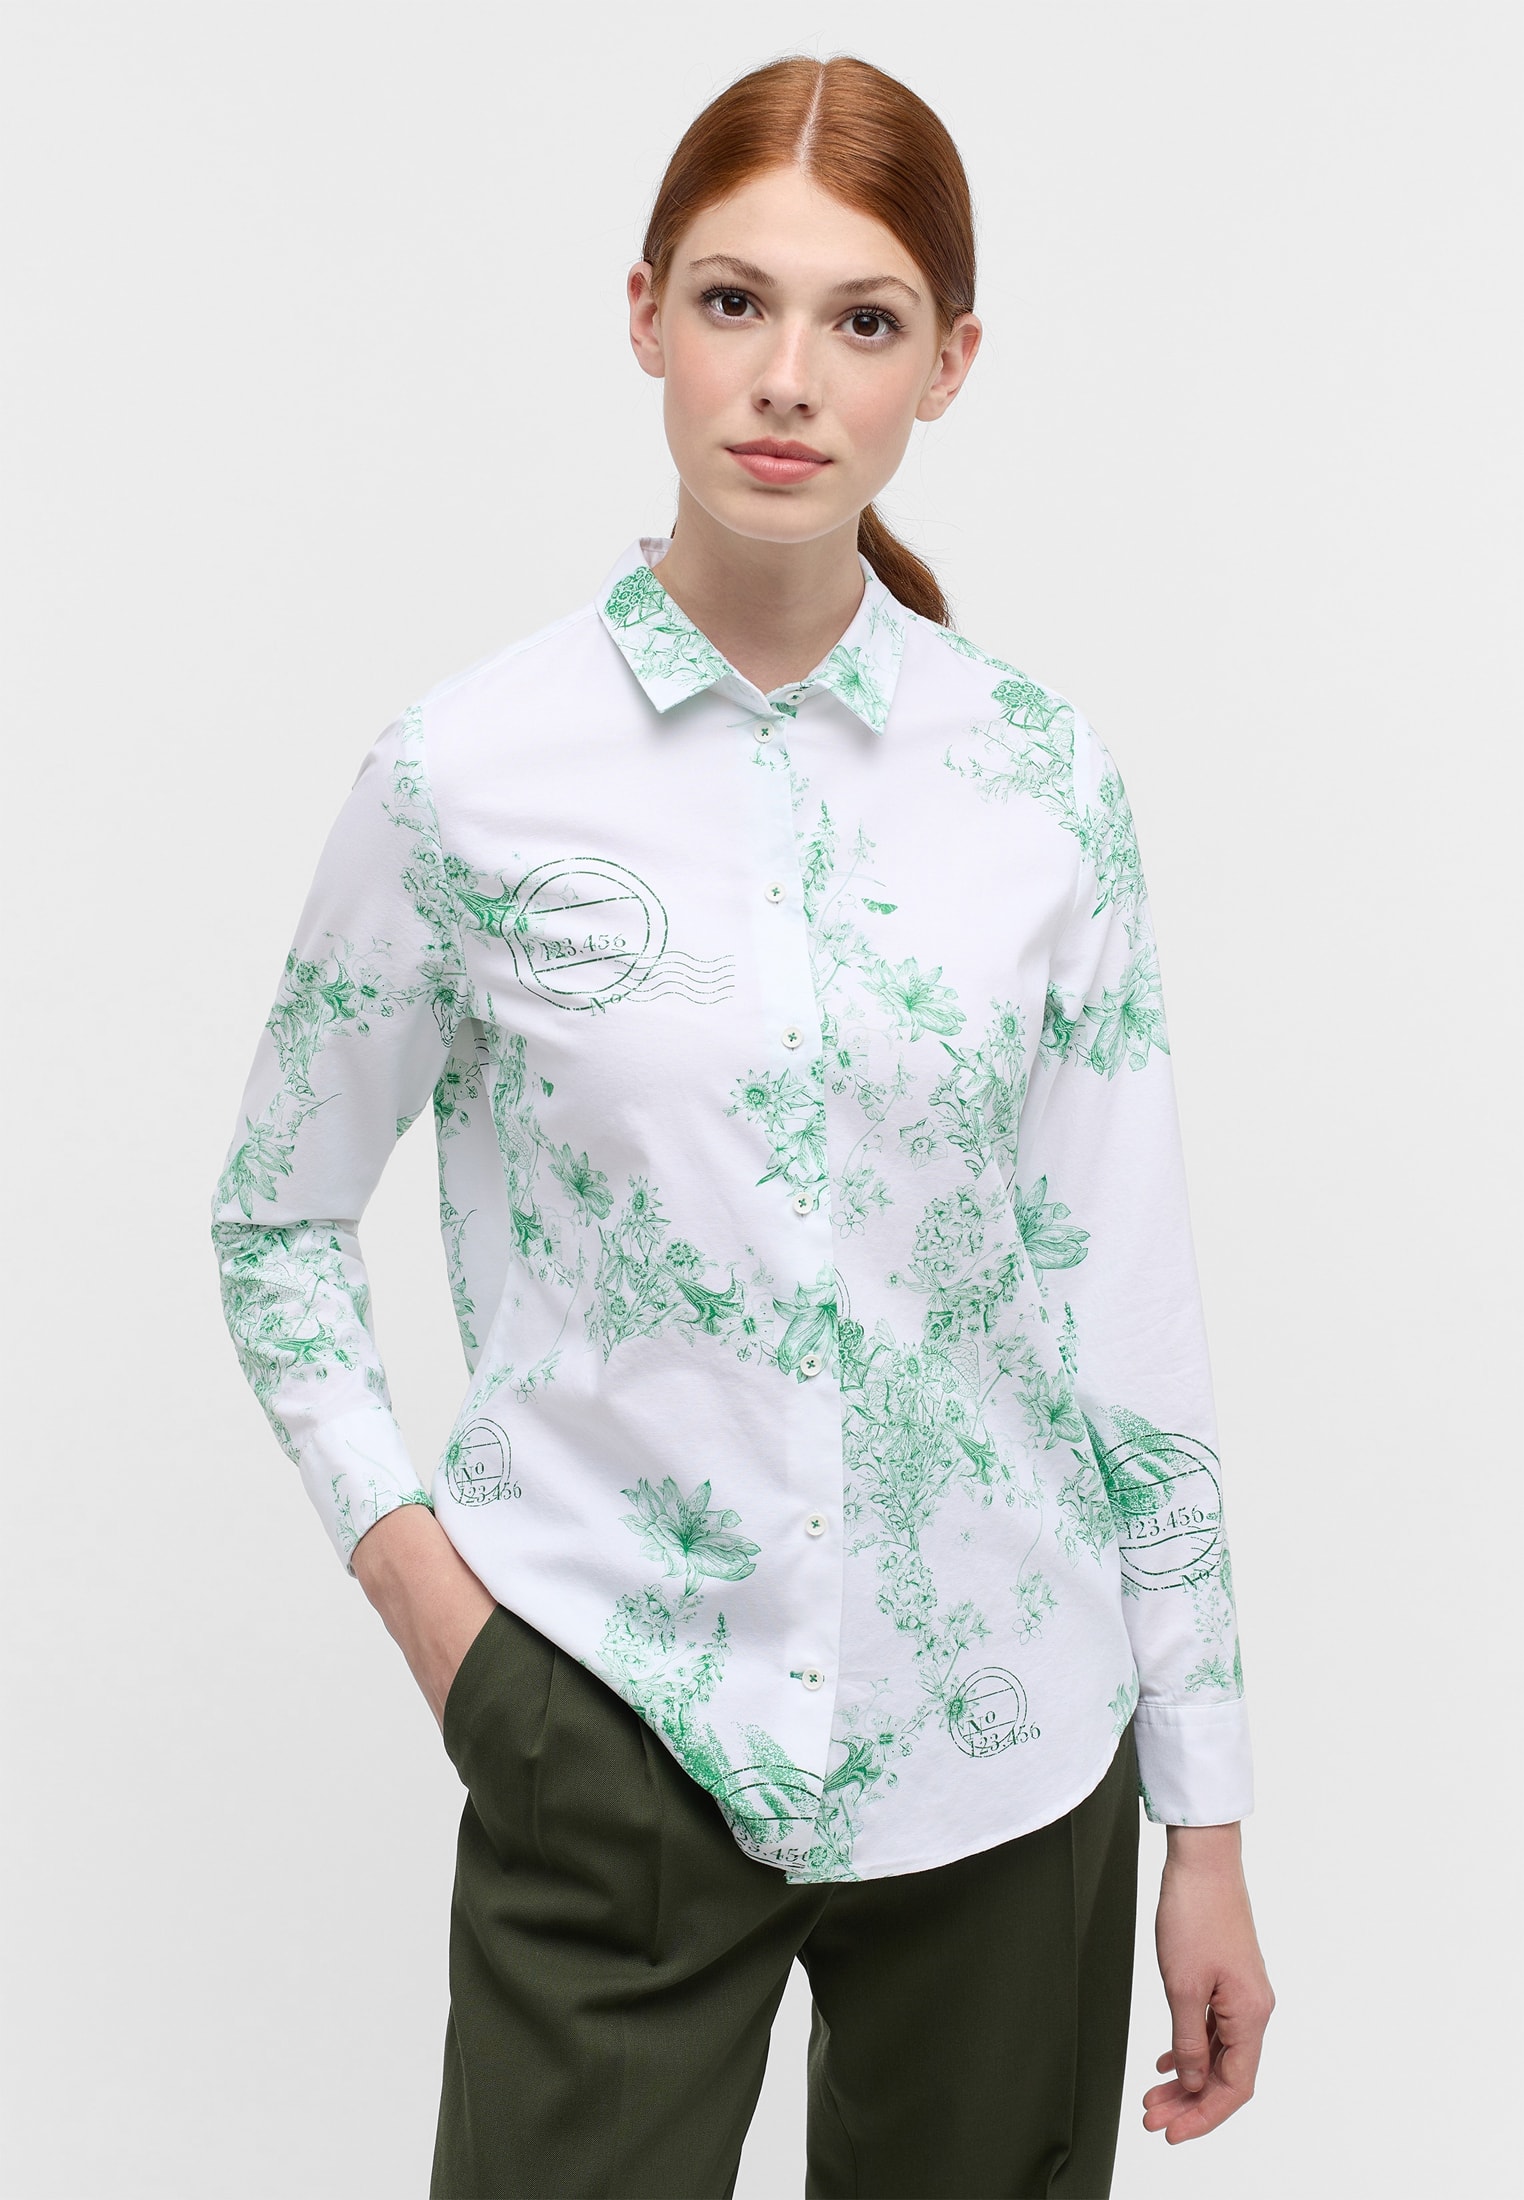 Oxford Shirt Bluse in grün 44 | 2BL04169-04-01-44-1/1 grün | Langarm bedruckt | 